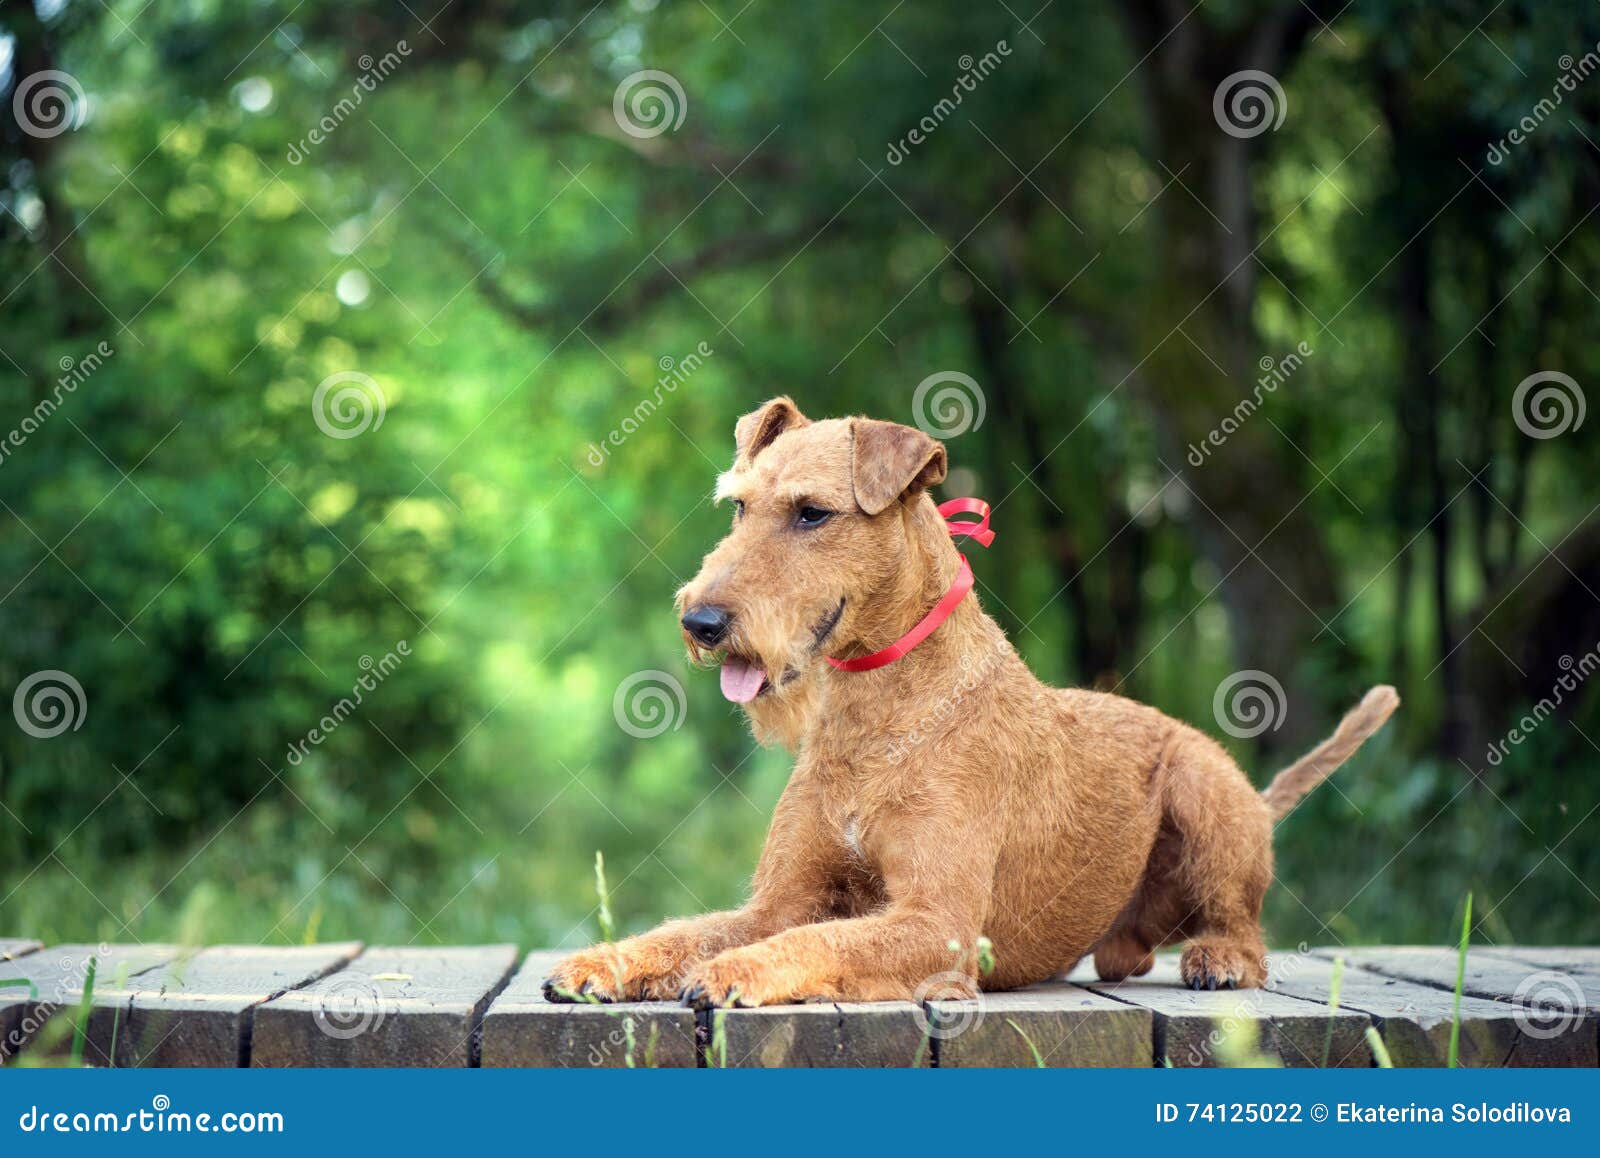 irish terrier dog lies on the wooden bridge